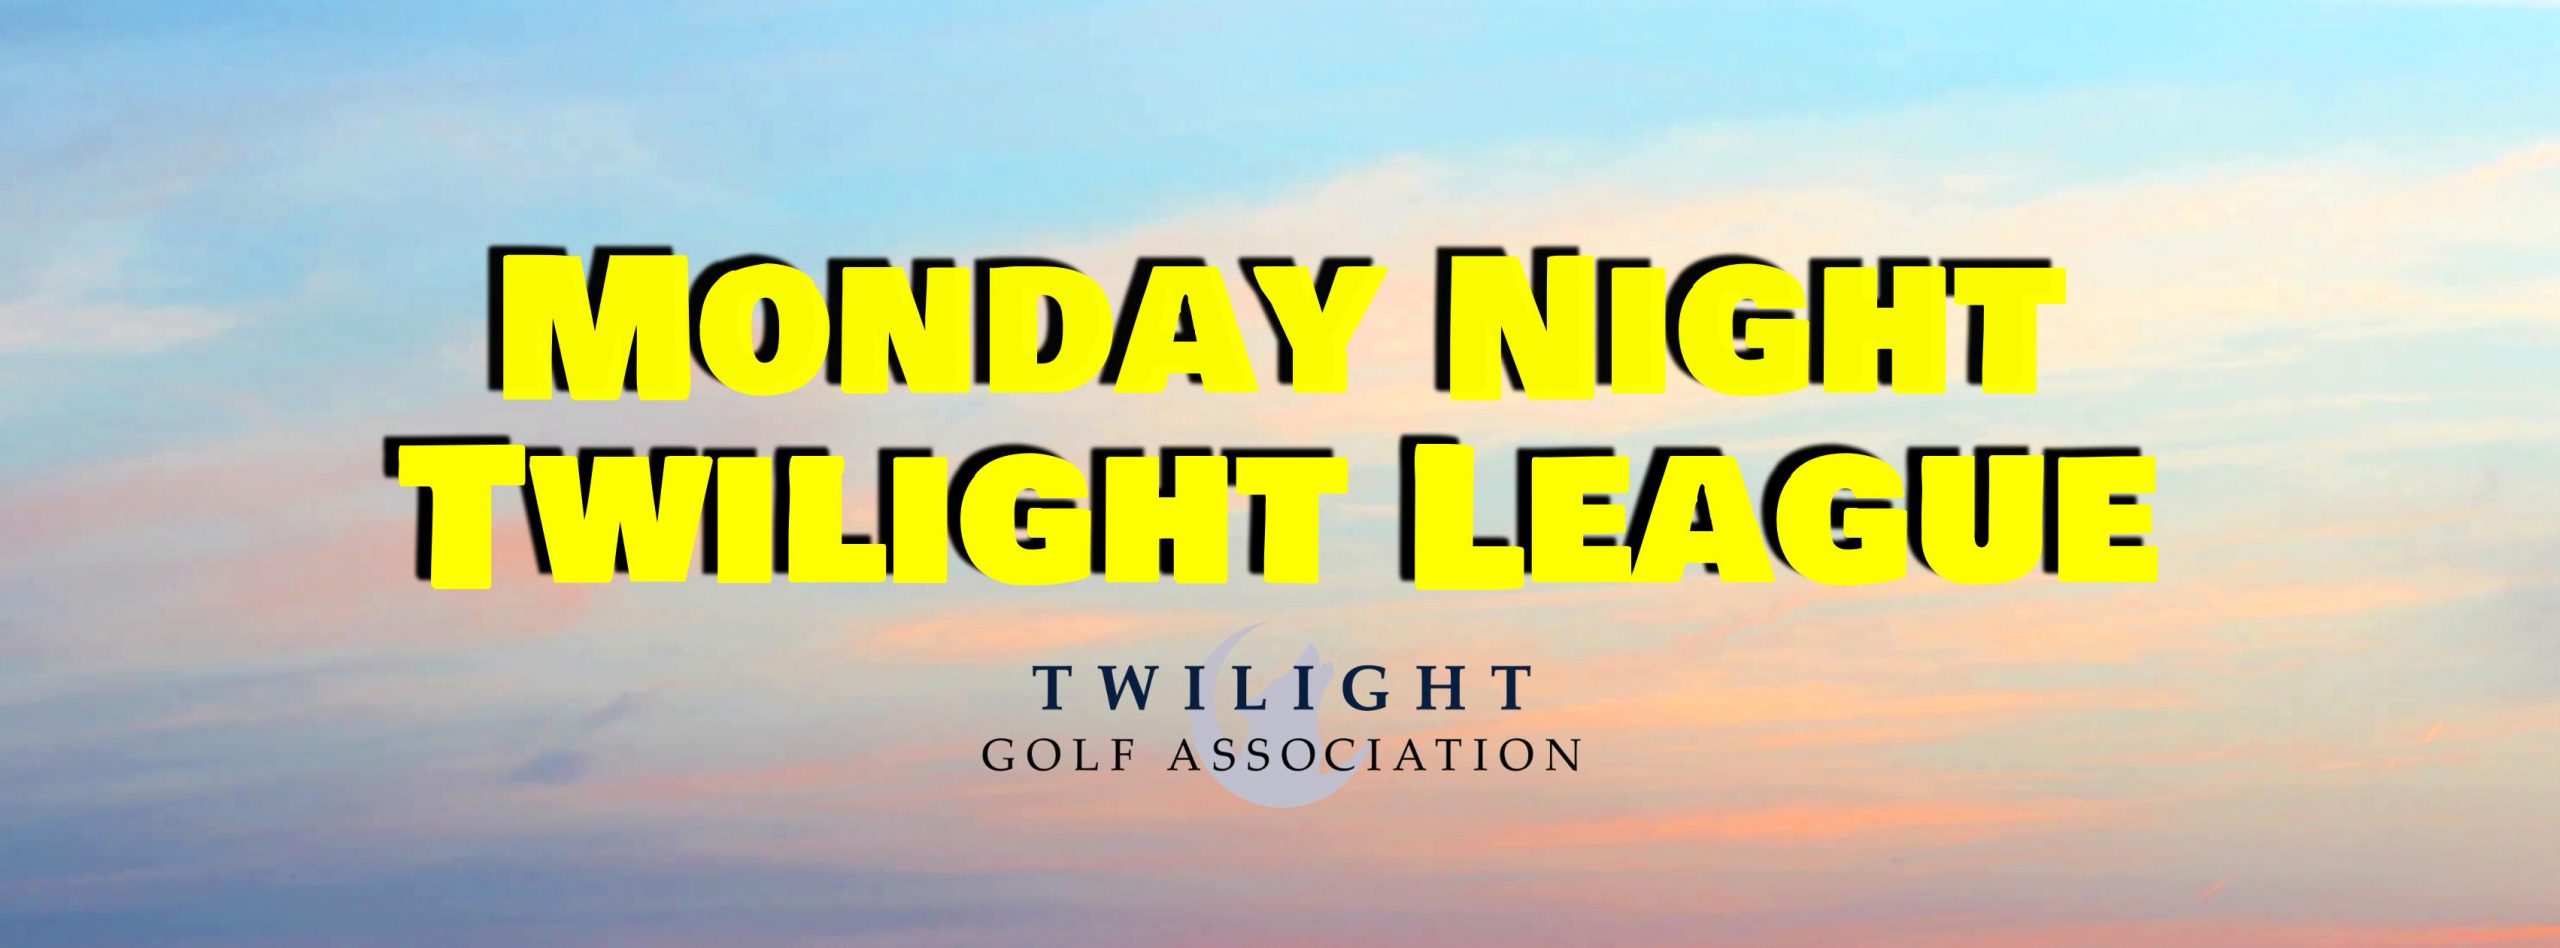 Monday Twilight League at Mount Pleasant Golf Course